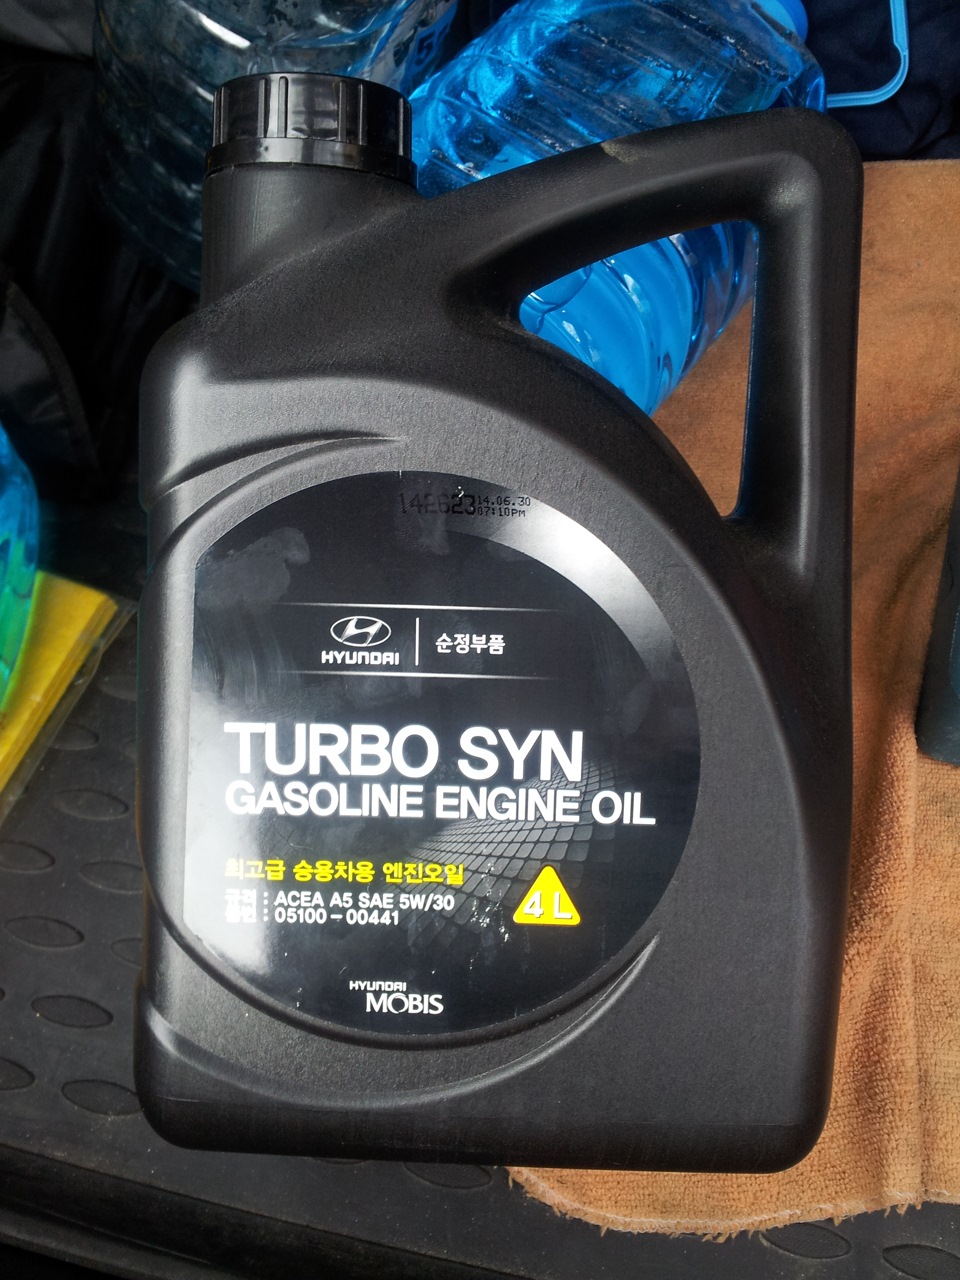 Какое масло киа рио 3 1.6. Hyundai Turbo syn gasoline engine Oil SAE 5w-30. Масло Хендай 5w30 в Киа Рио. Хендай масло для Киа Рио 1.6 5w30. Моторное масло Киа Рио 3 оригинал.